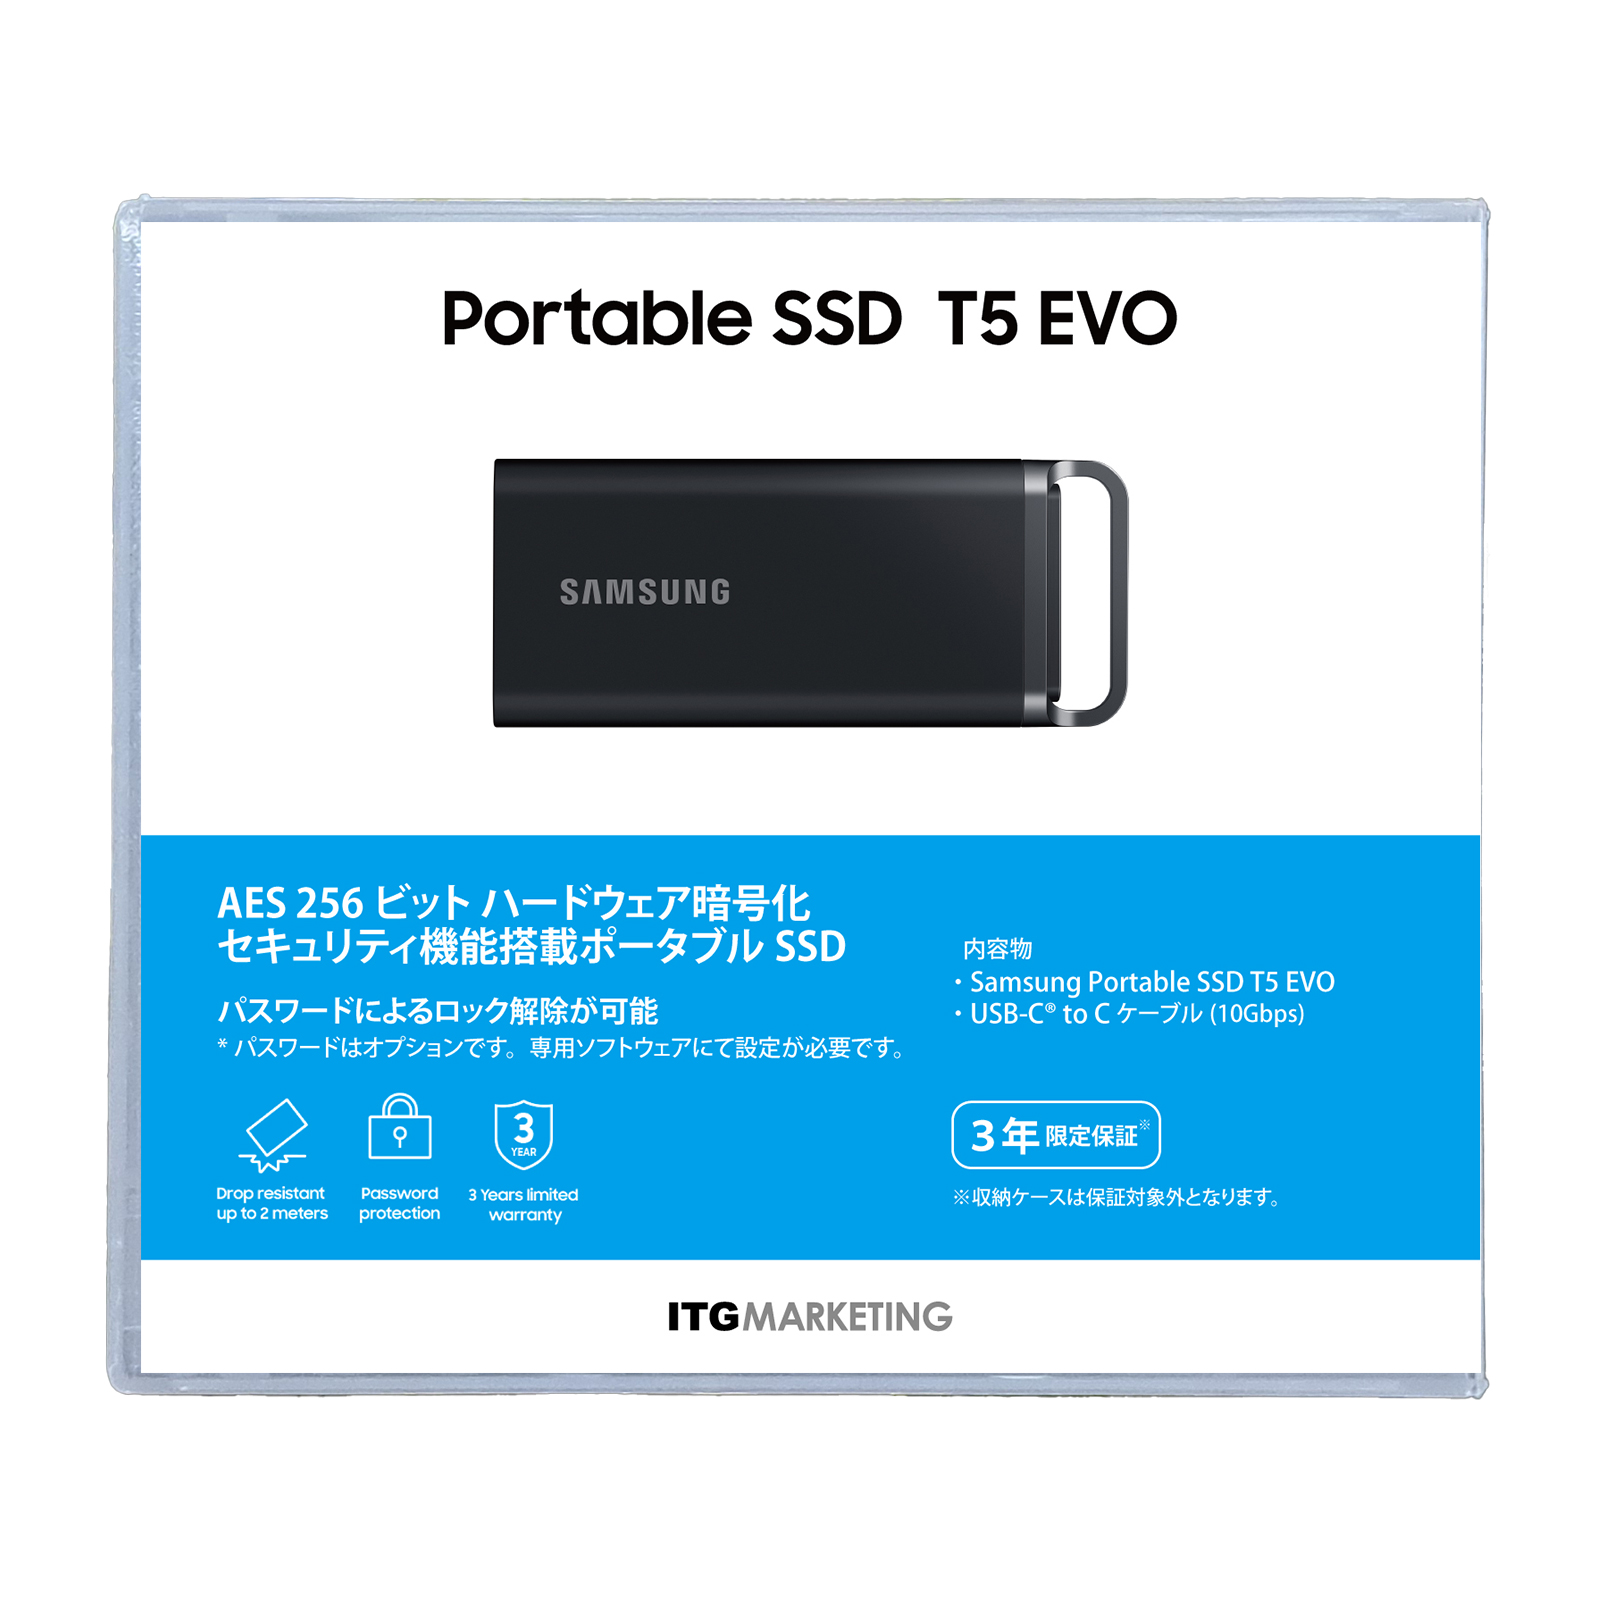 Samsung Portable SSD T5 EVO（2TB）放送局向け専用ケース入りモデル